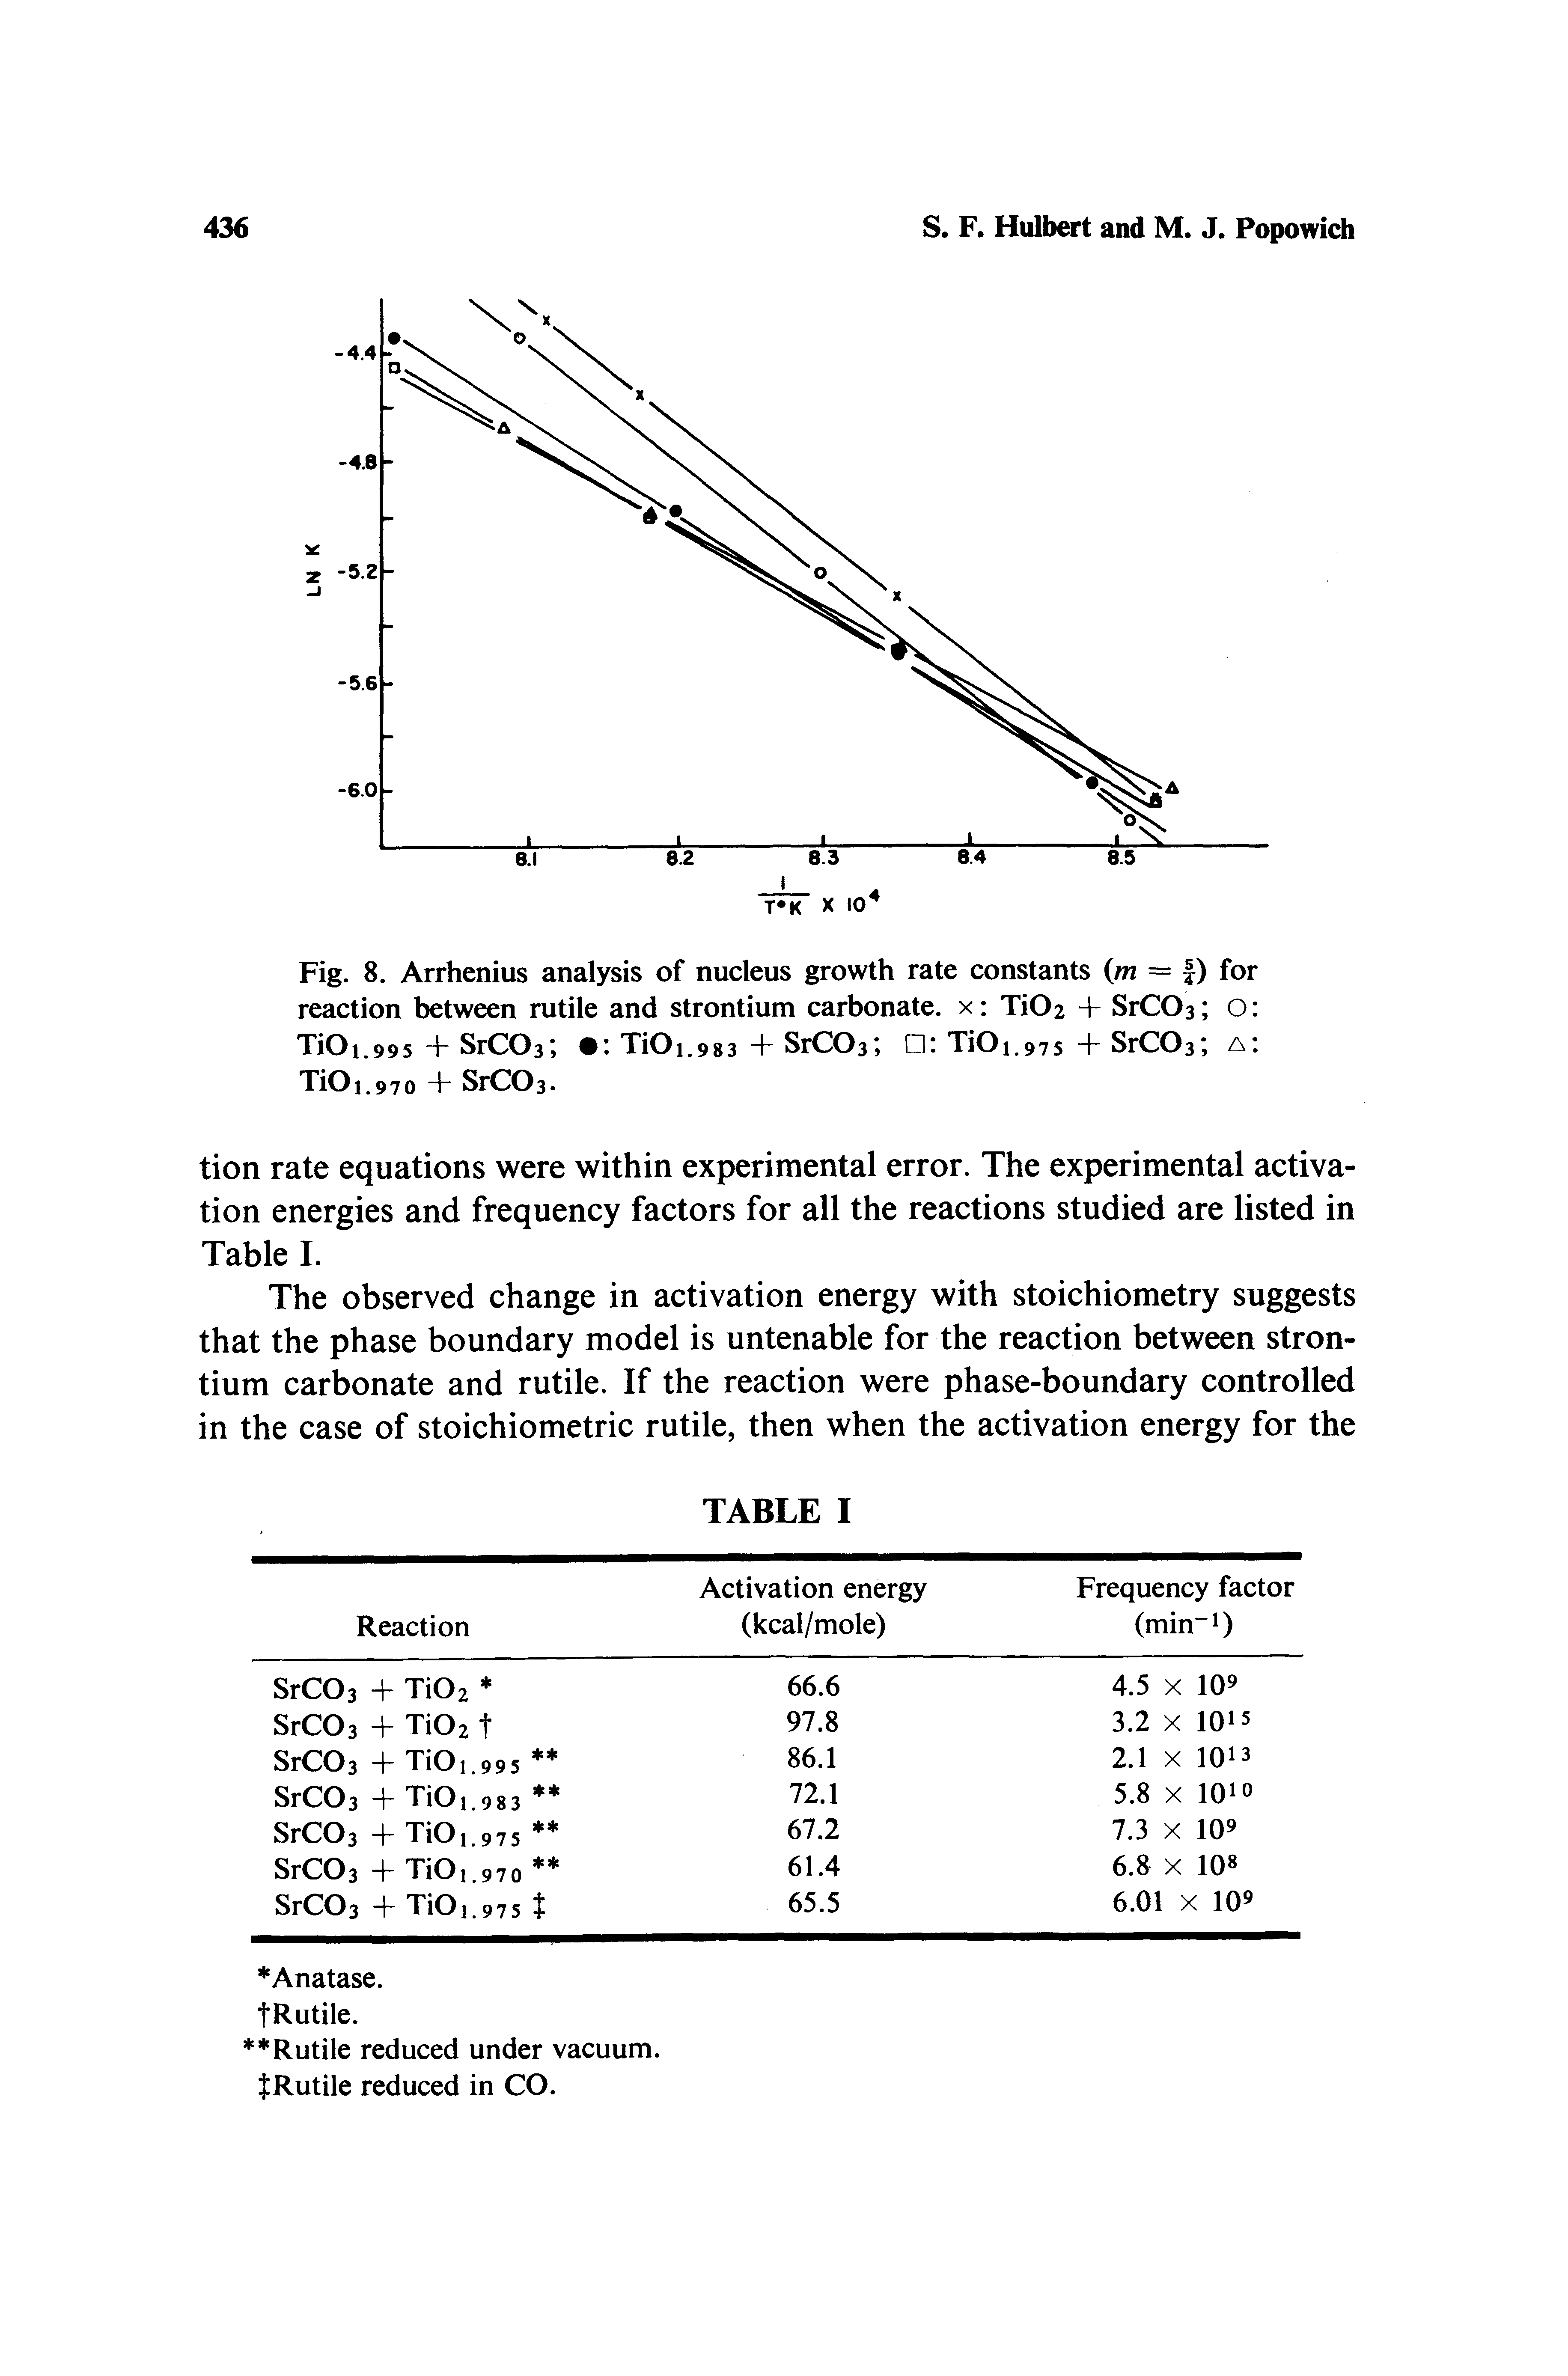 Fig. 8. Arrhenius analysis of nucleus growth rate constants (m = ) for reaction between rutile and strontium carbonate, x Ti02 + SrCOs O TiOi.995 + SrCOa TiOi.983 + SrCOs TiOi.97s + SrCOs a TiOi.970 + SrCOa.